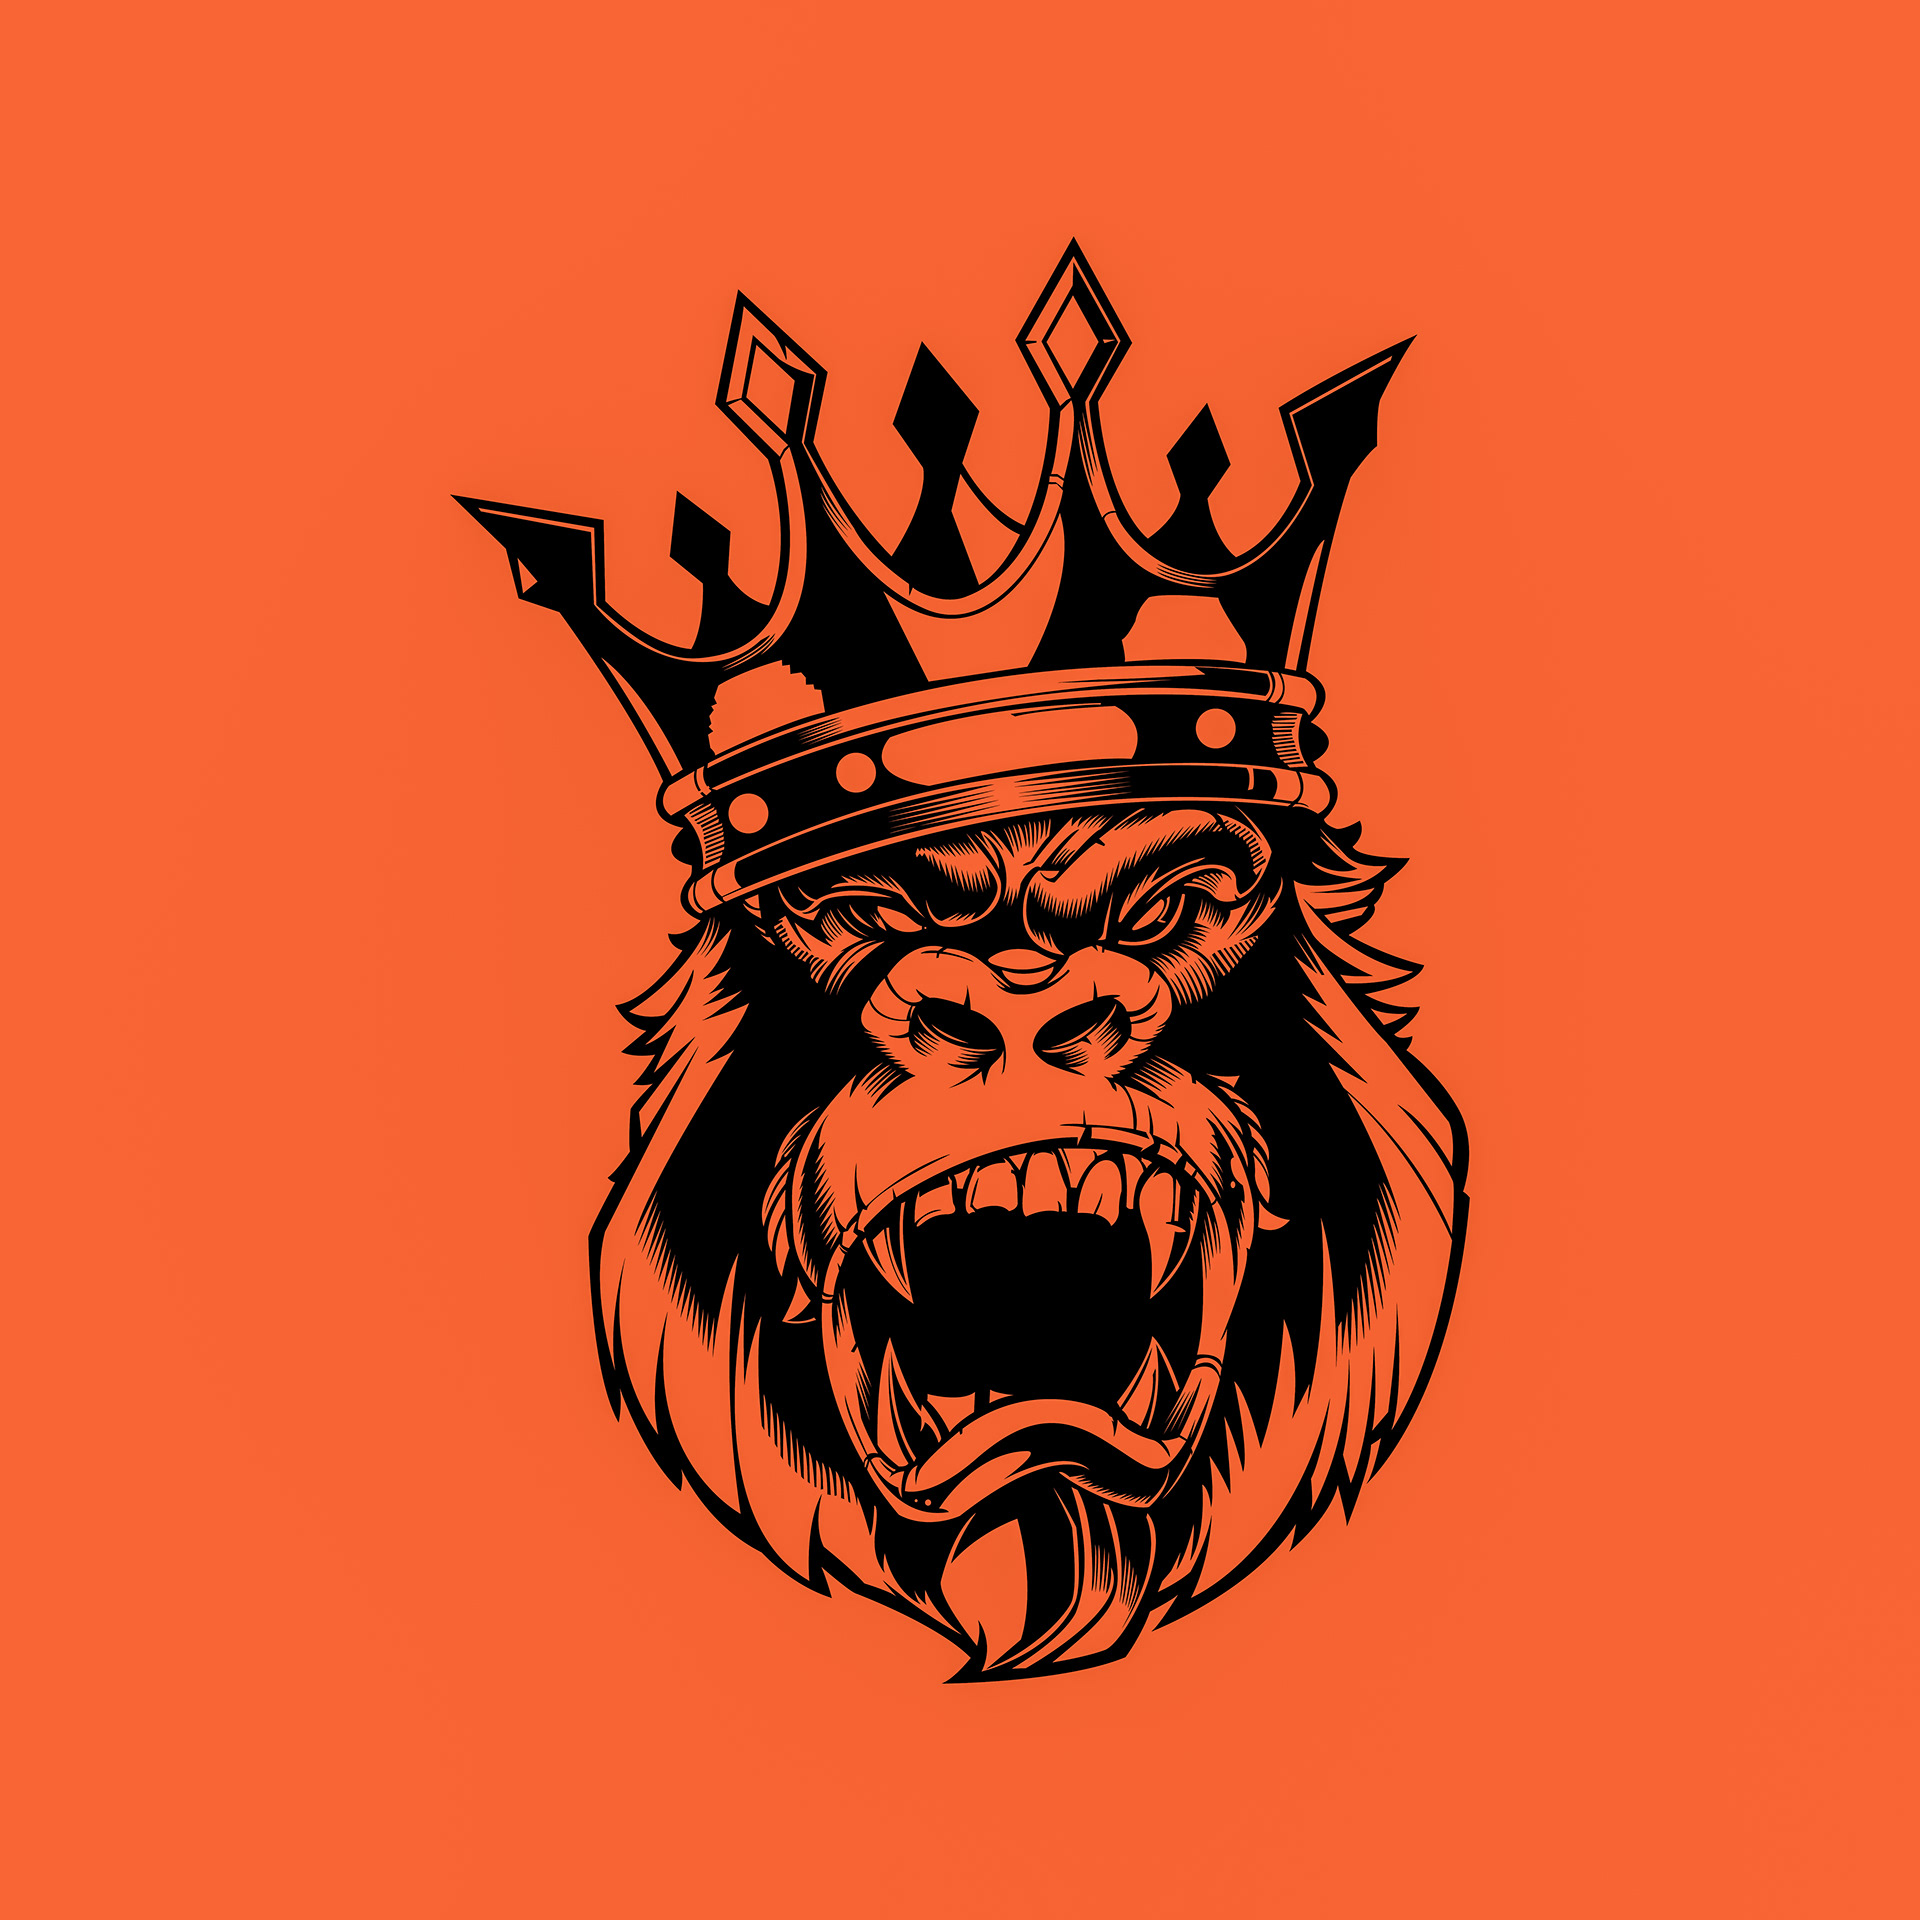 Kingkong mascot esport logo design - Stock Illustration [67009175] - PIXTA